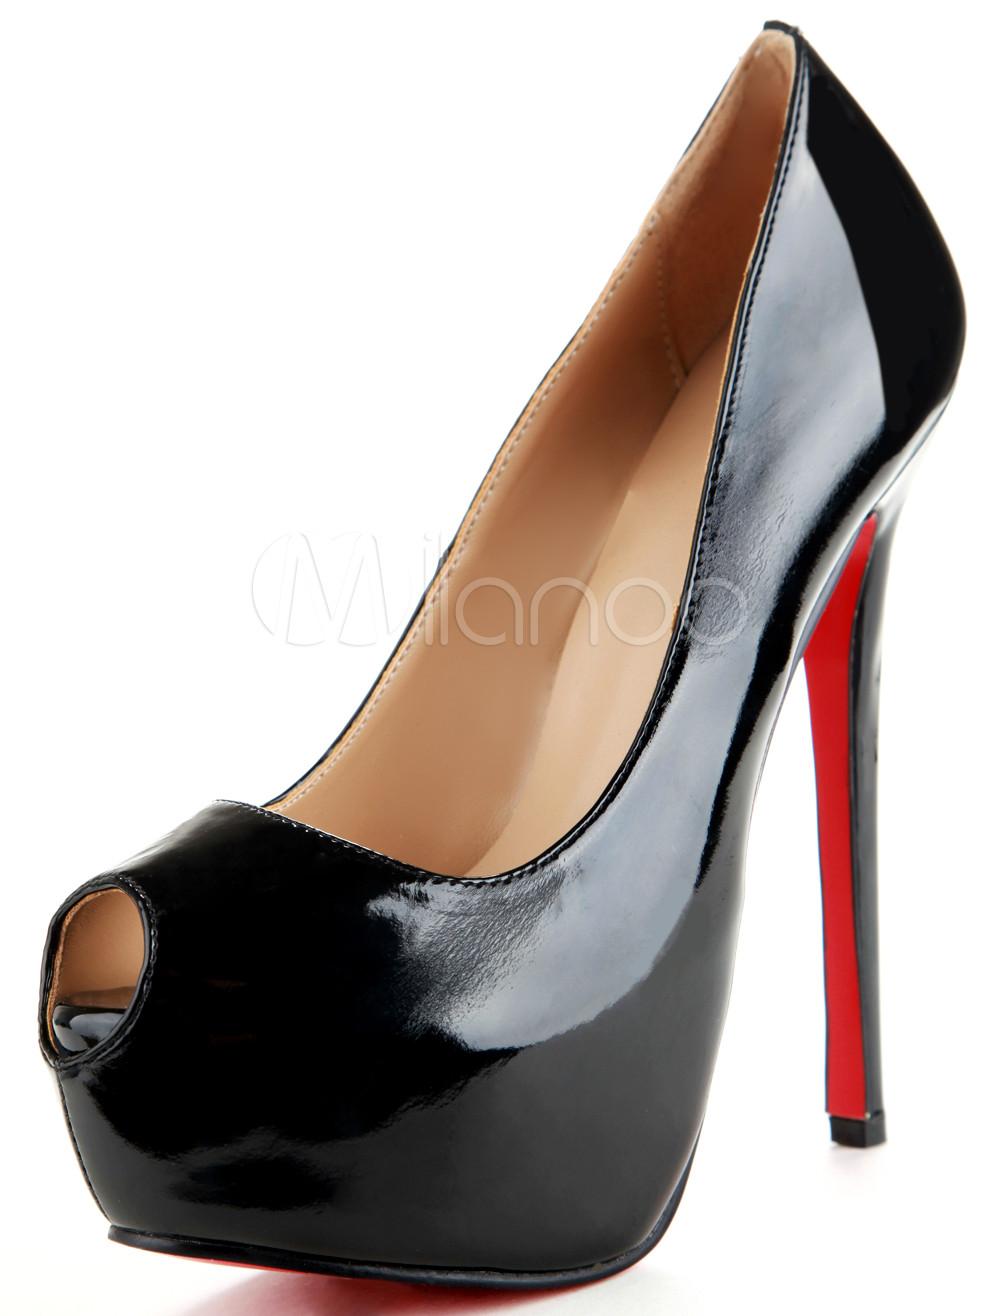 Foto Zapatos negros de tacón Peep Toe de plataforma charol Womens alta